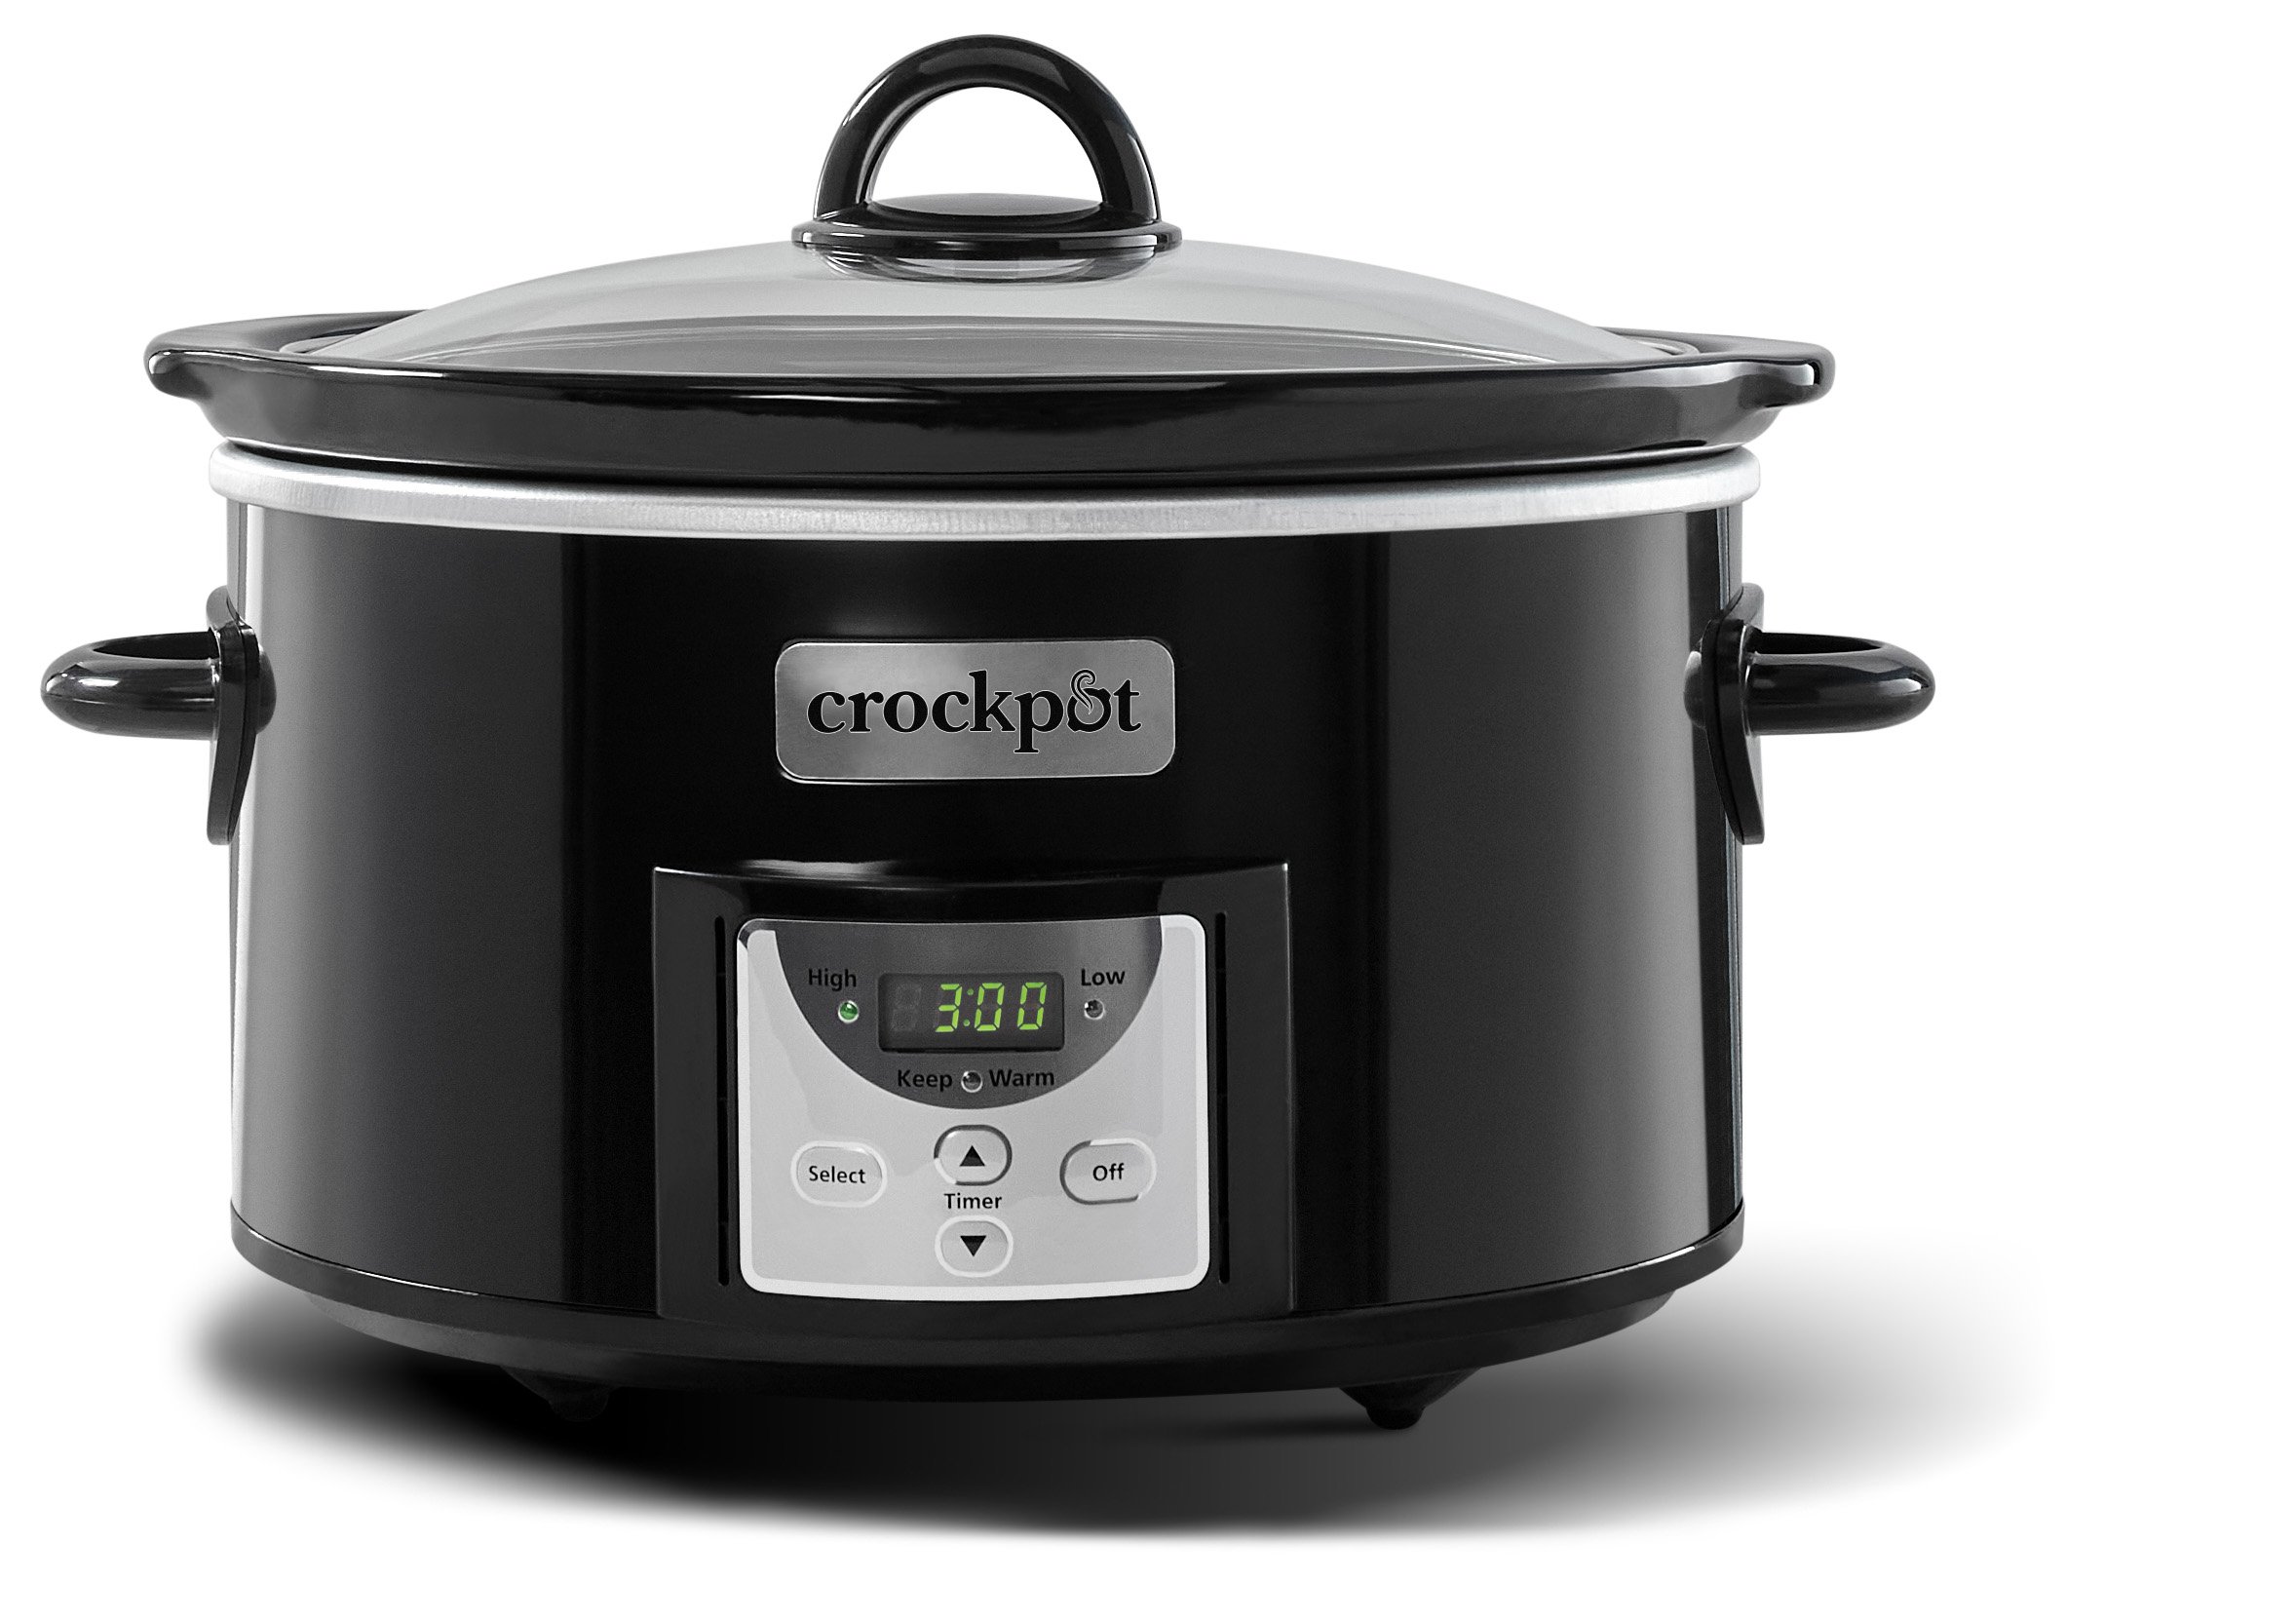 One of the best Crock-Pot Slow Cooker deals yet: 4-quart for $15 (Reg. $30)